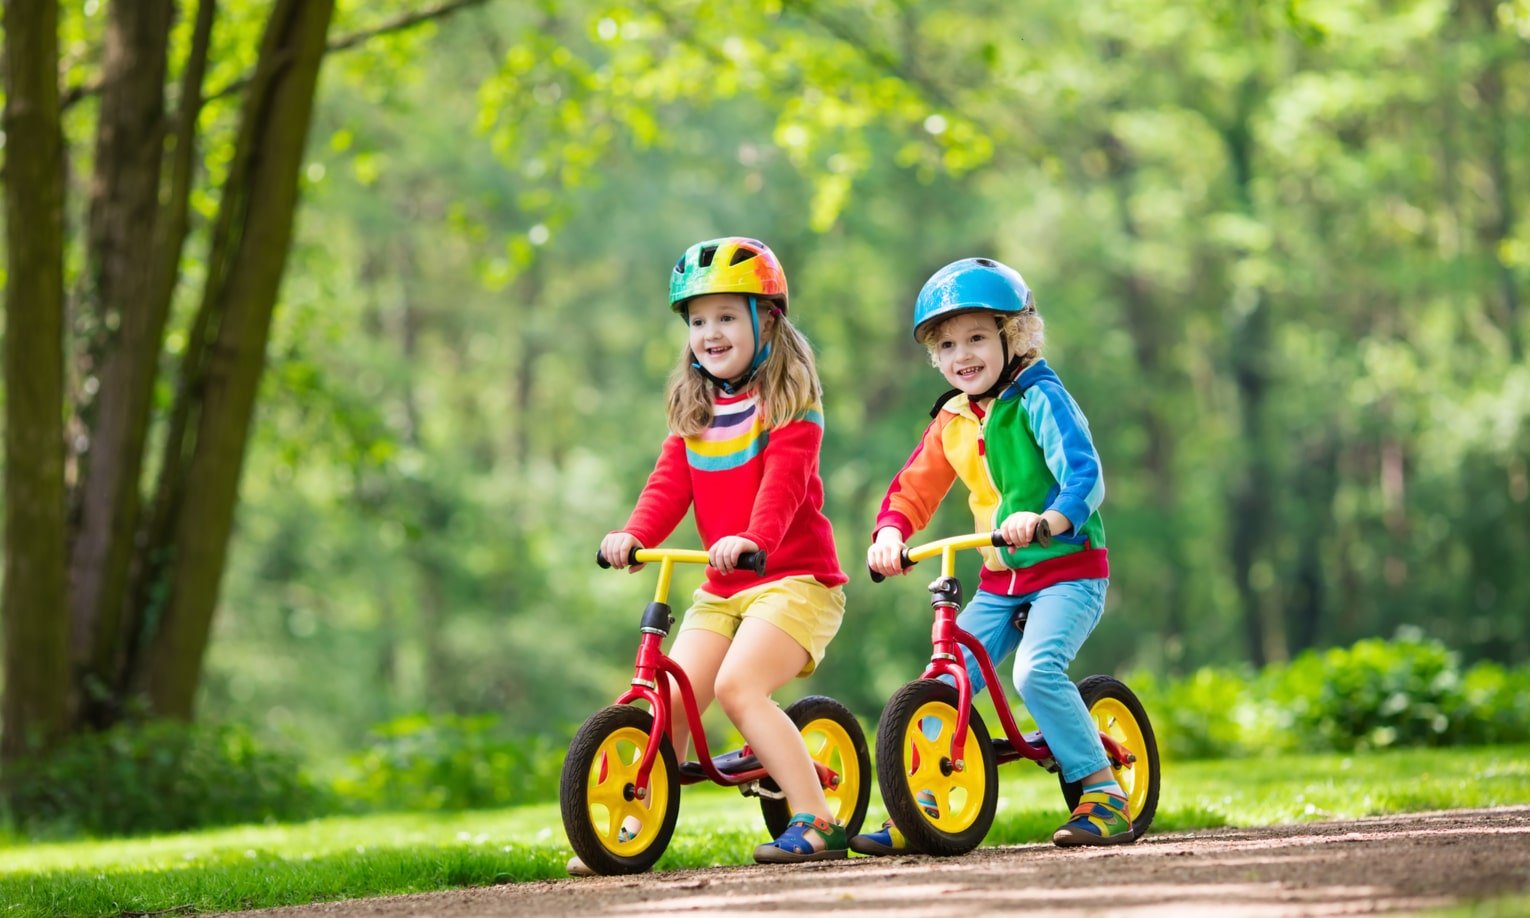 zens un meitene brauc ar balansa velosipediem parka